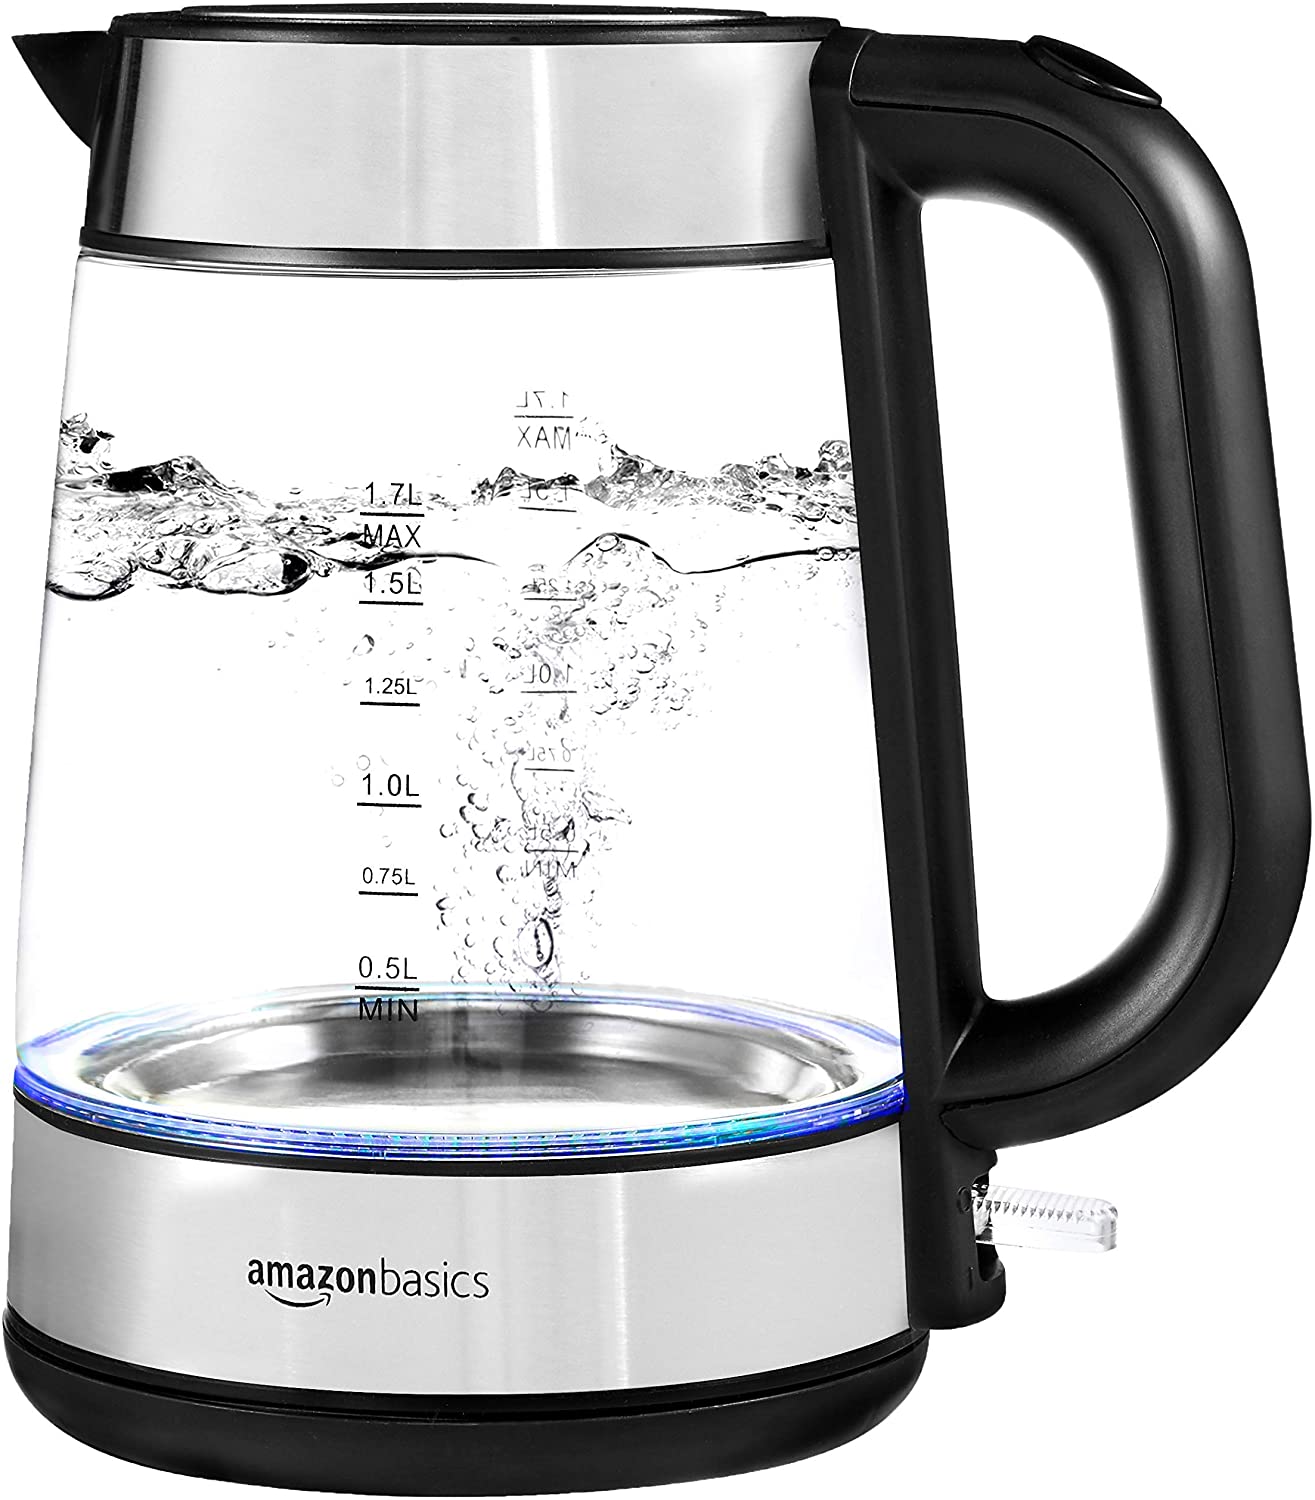 AmazonBasics Countertop Tea Pot Kettle, 1.7-Liter